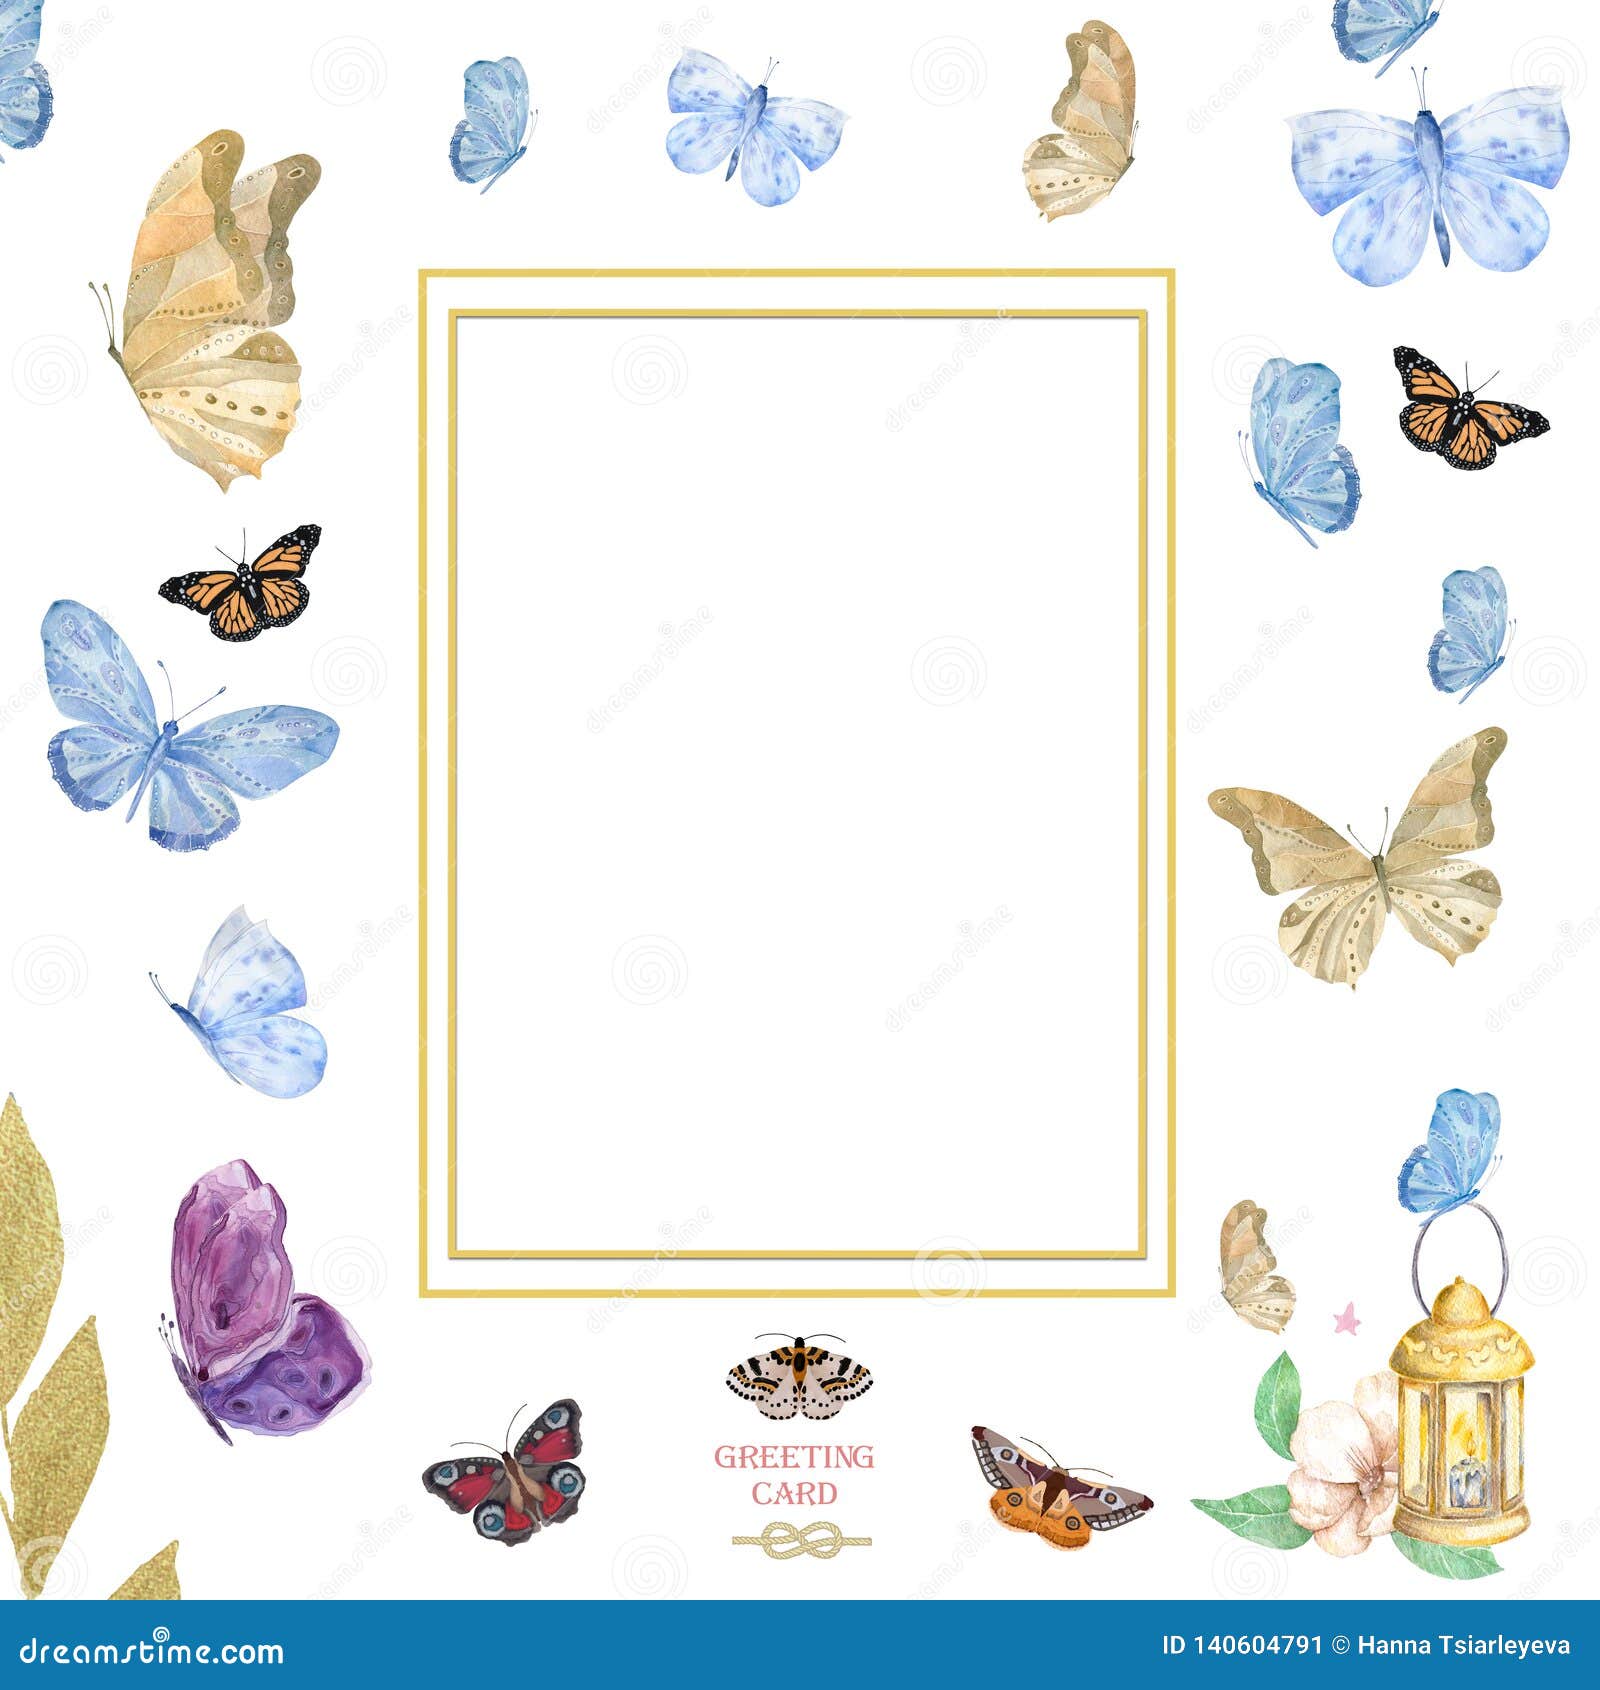 Elegant Happy Birthday Card in Spanish Felìz Cumpleaños Butterflies Design